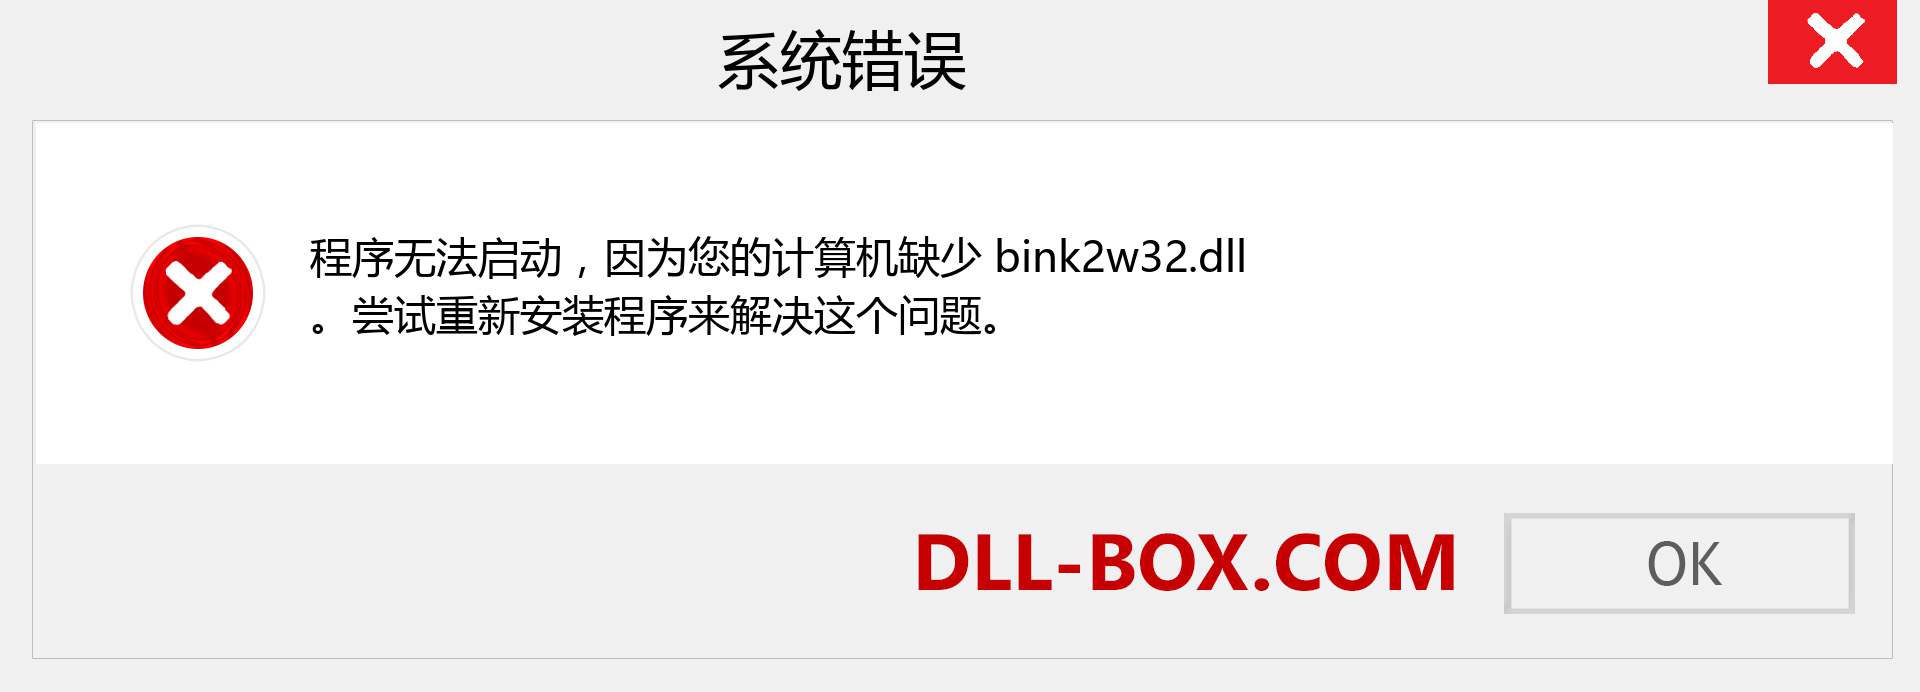 bink2w32.dll 文件丢失？。 适用于 Windows 7、8、10 的下载 - 修复 Windows、照片、图像上的 bink2w32 dll 丢失错误